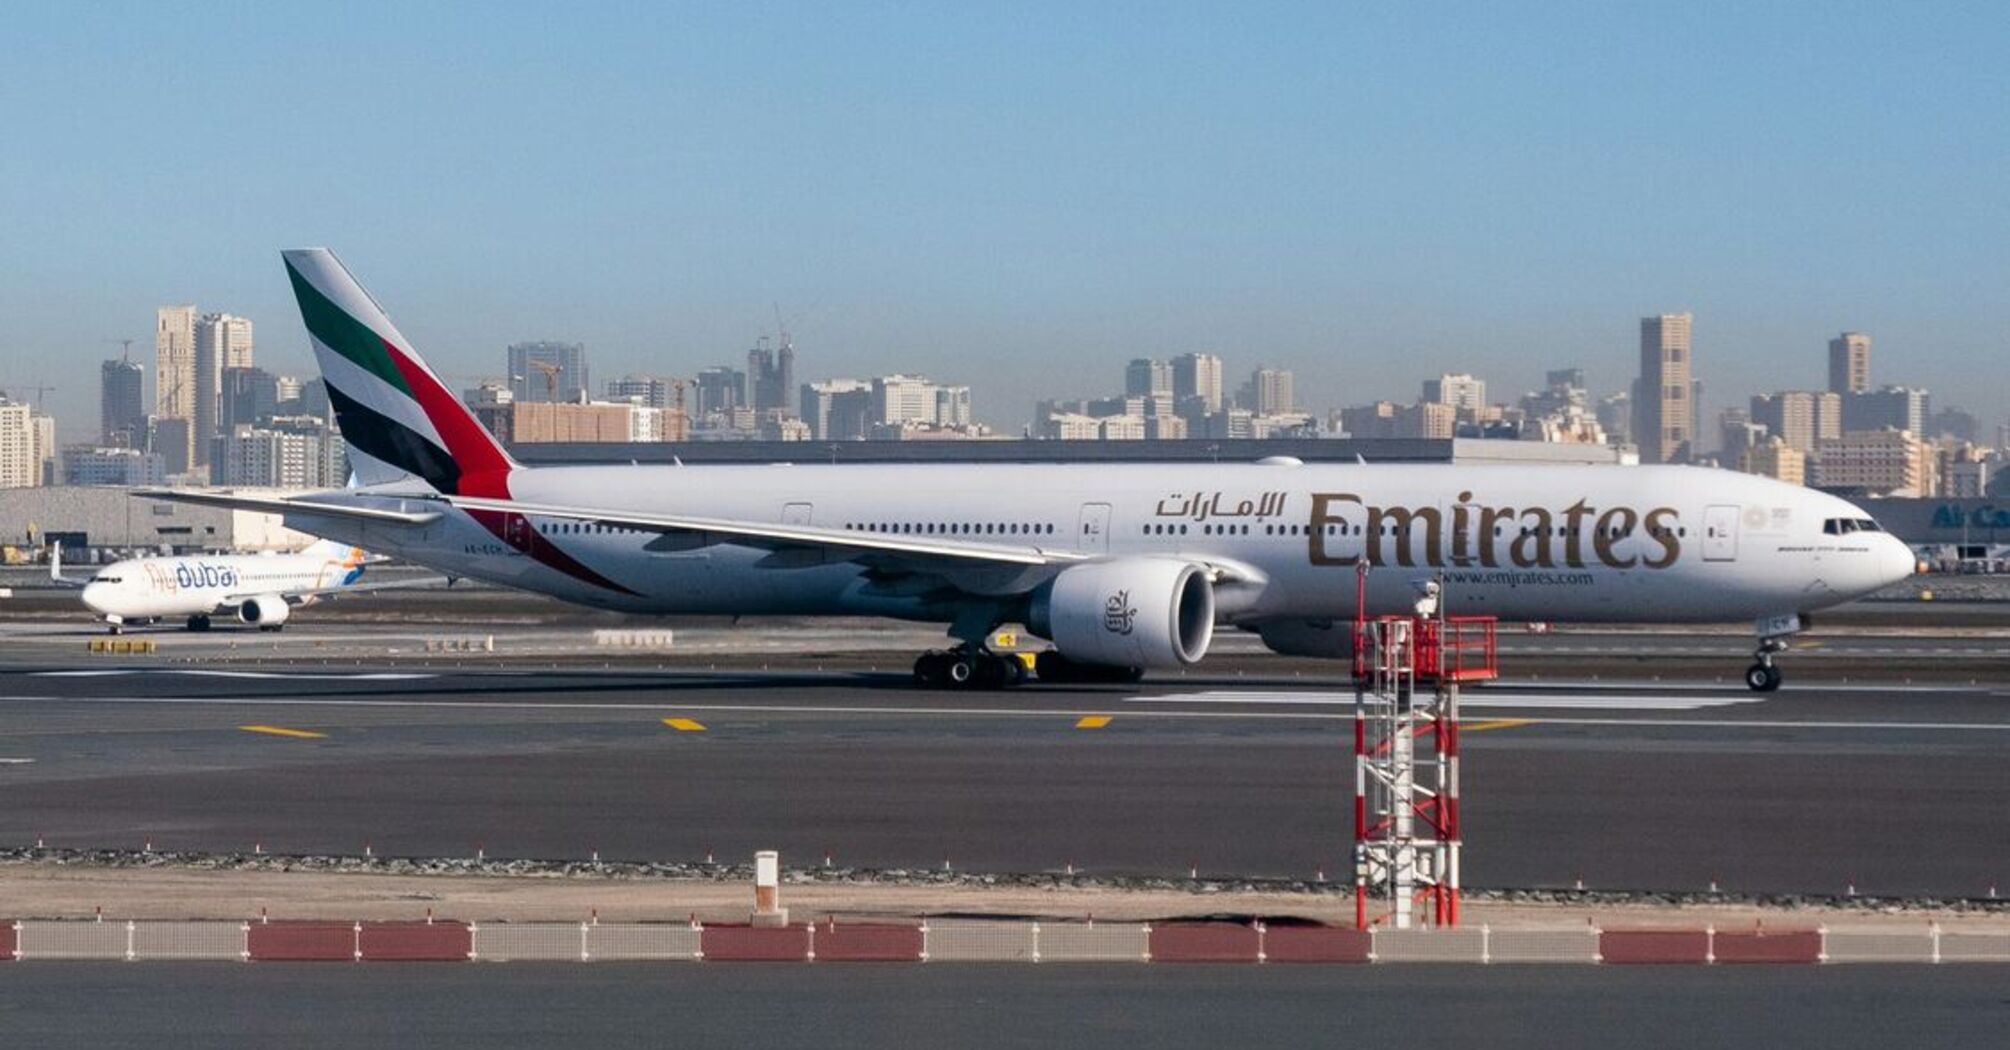 Emirates plane on the runway